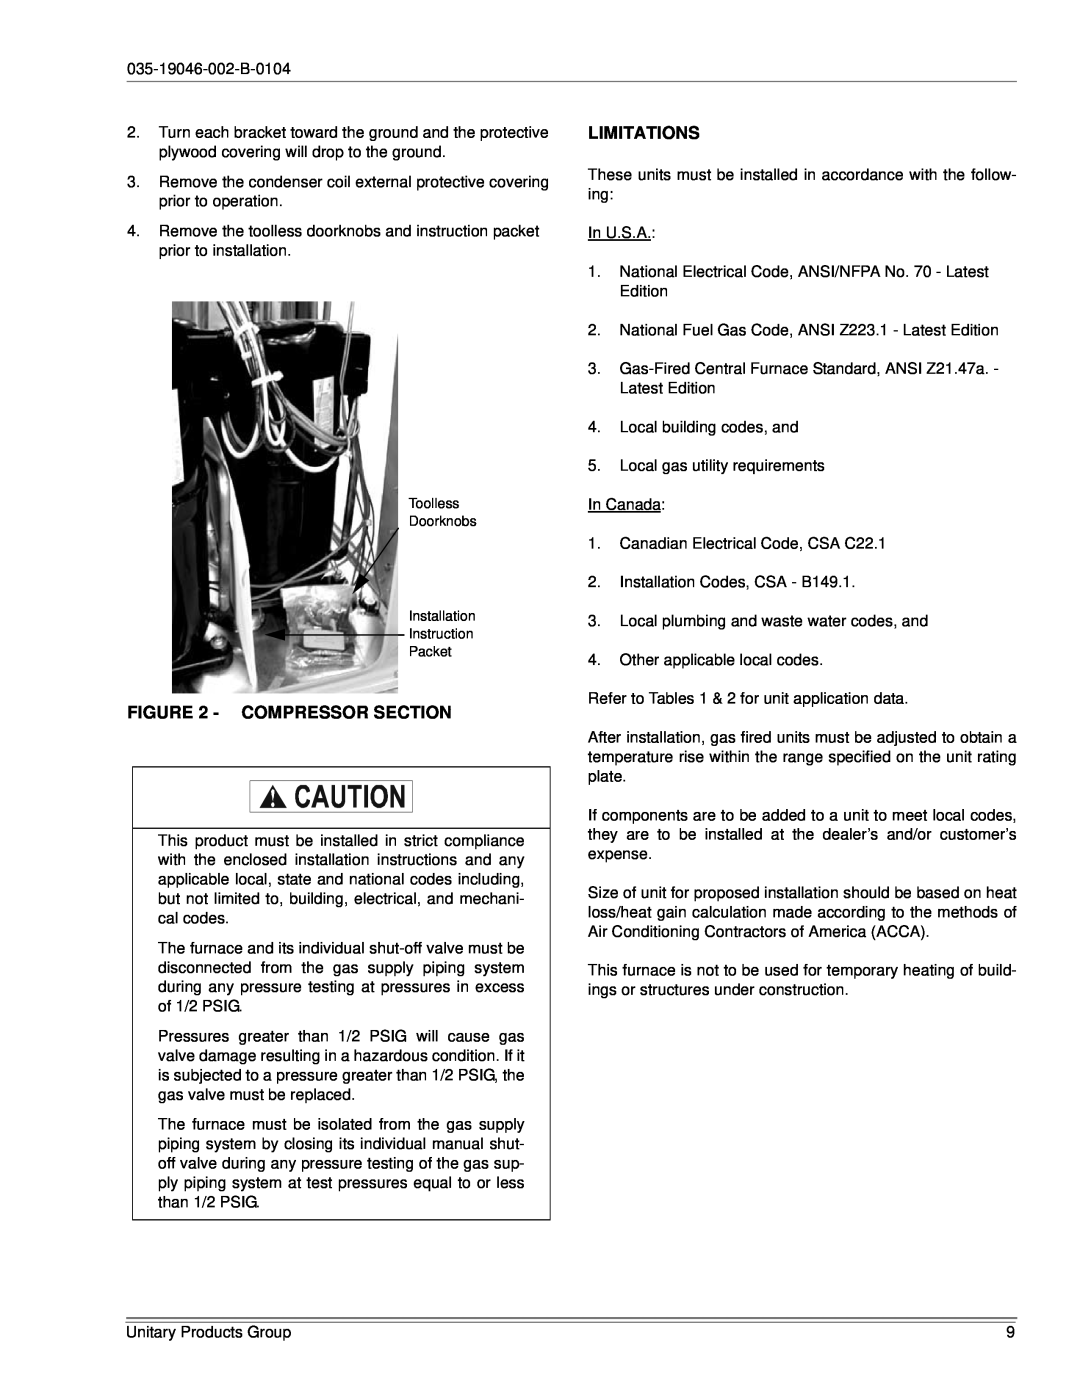 York DJ150 installation manual Compressor Section, Limitations 